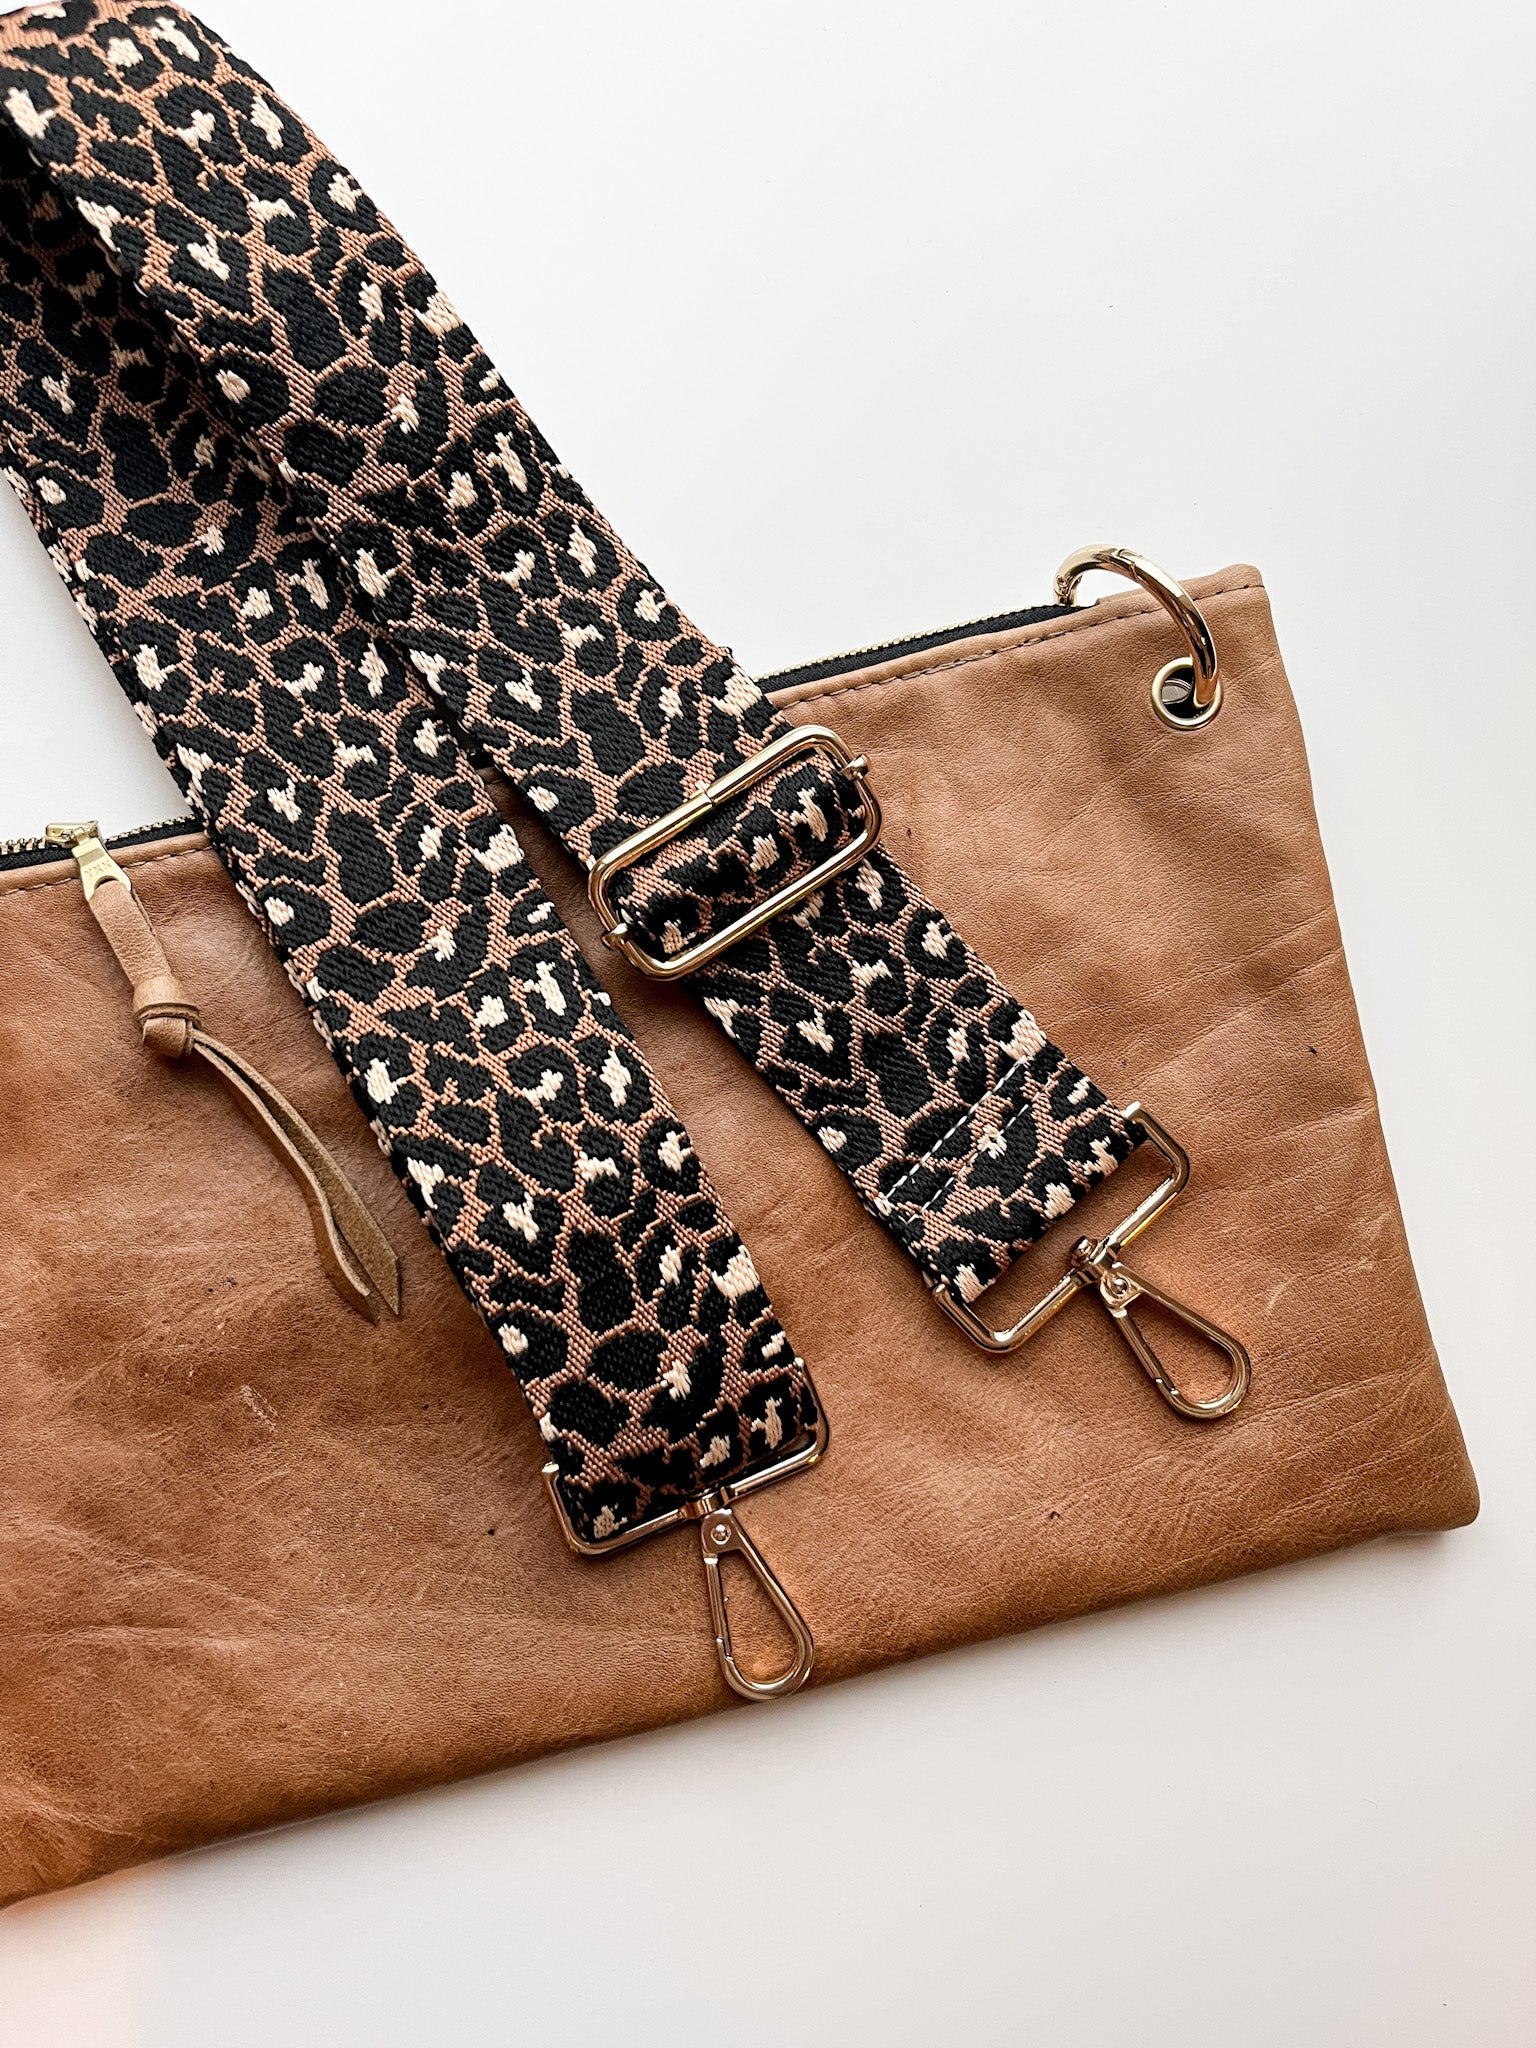 Celine Trio Leopard Printed Leather Crossbody in Brown